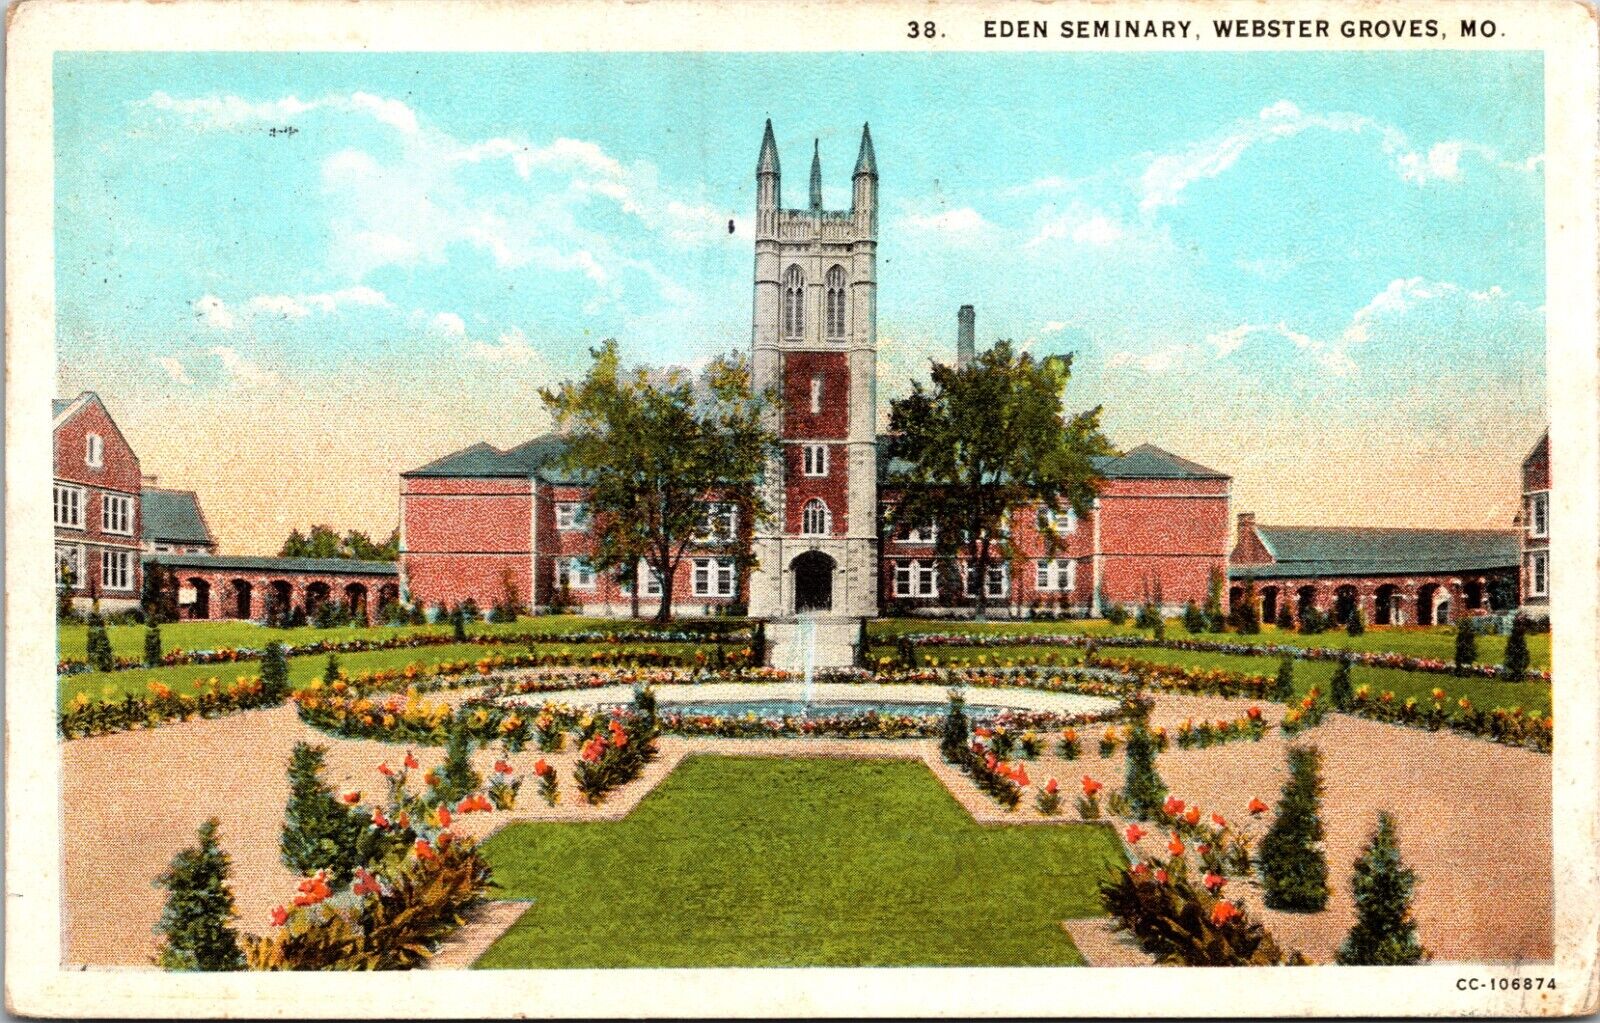 Eden Seminary, Webster Groves, Missouri - Postcard